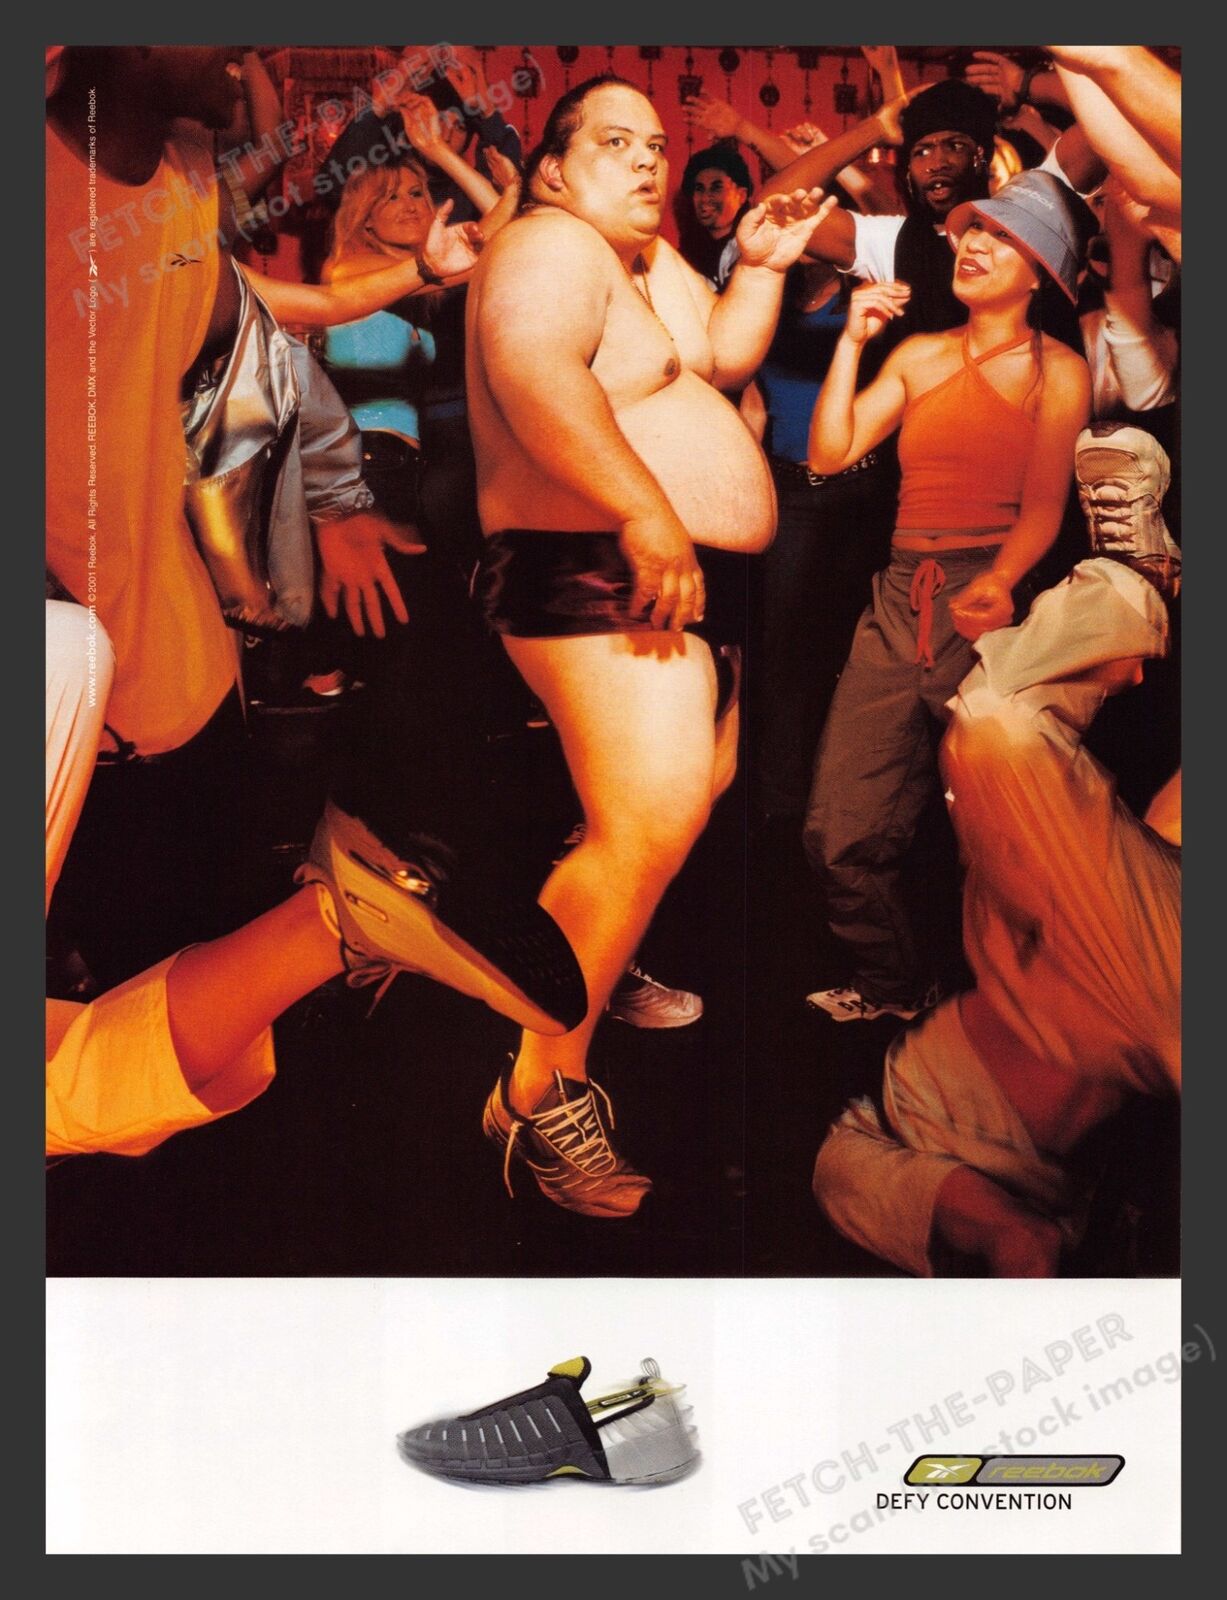 Reebok Defy Convention Sumo Wrestler Dance Party 2001 Print Advertisement Ad